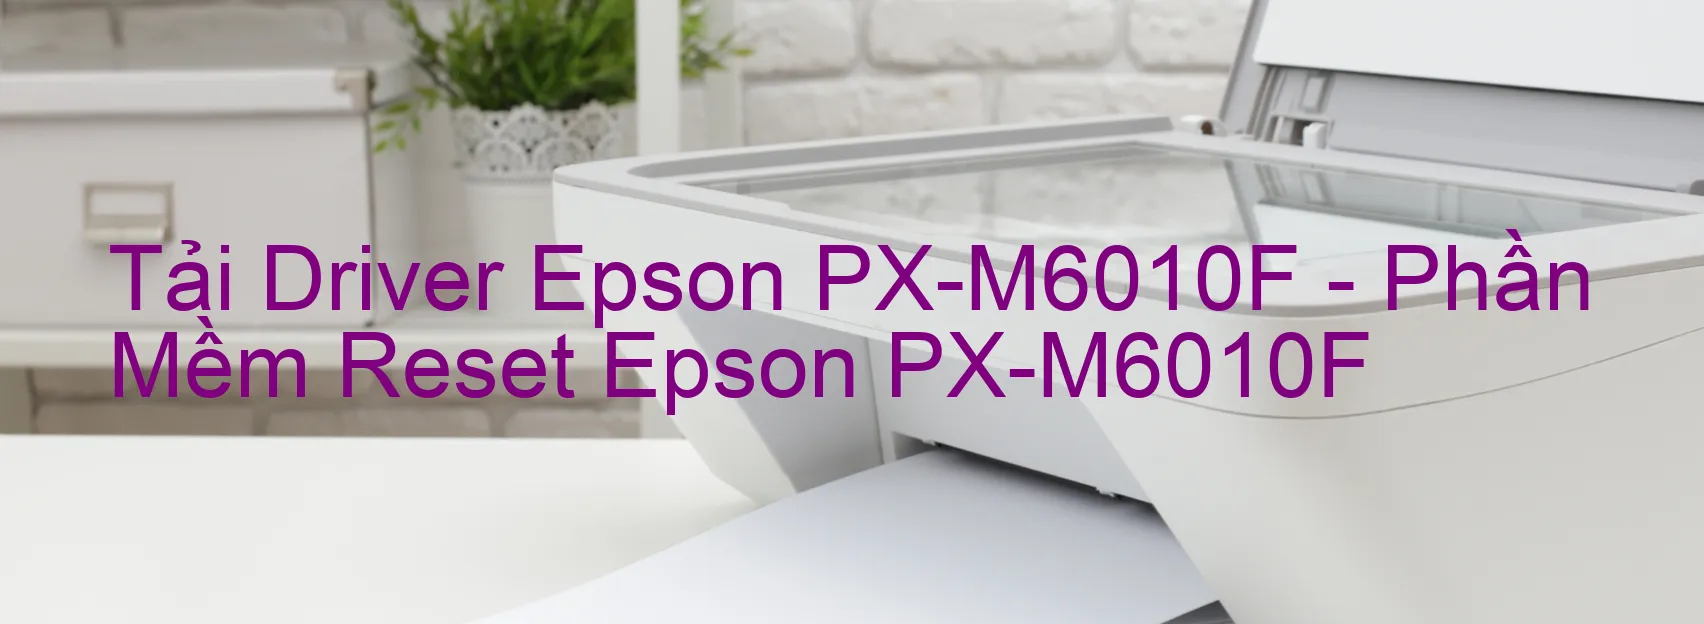 Driver Epson PX-M6010F, Phần Mềm Reset Epson PX-M6010F